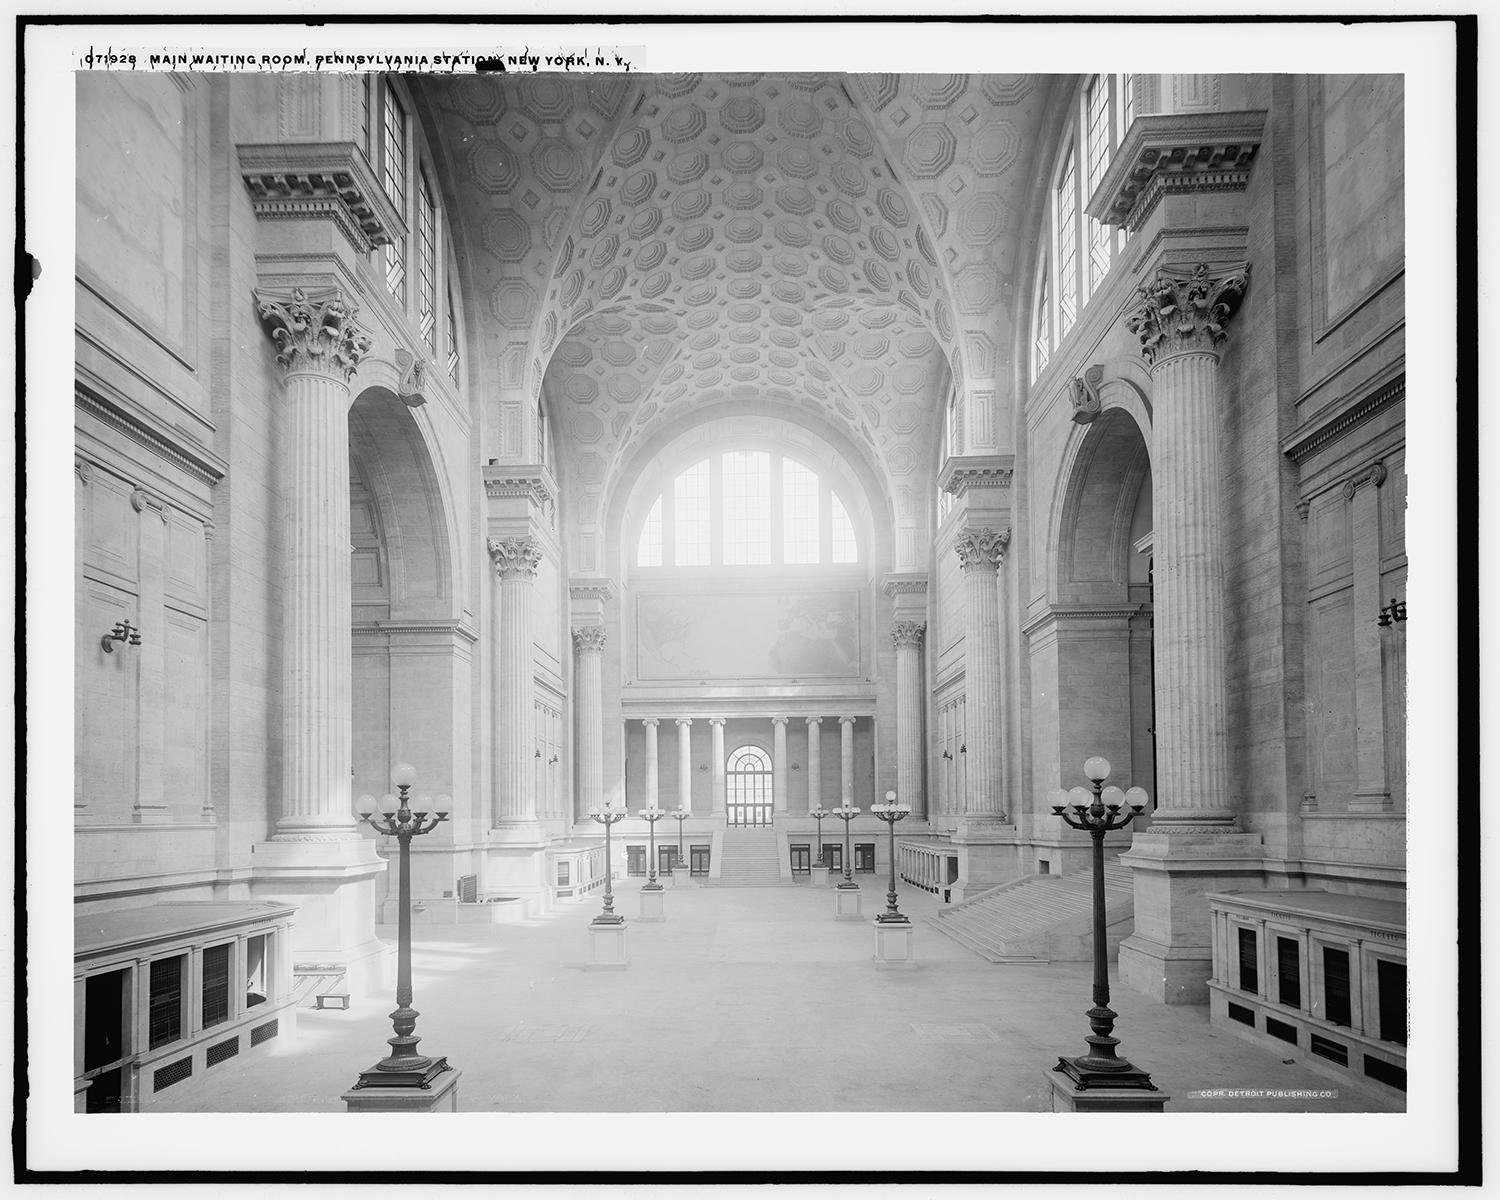 Main waiting room at Penn Station. Photo via Library of Congress.